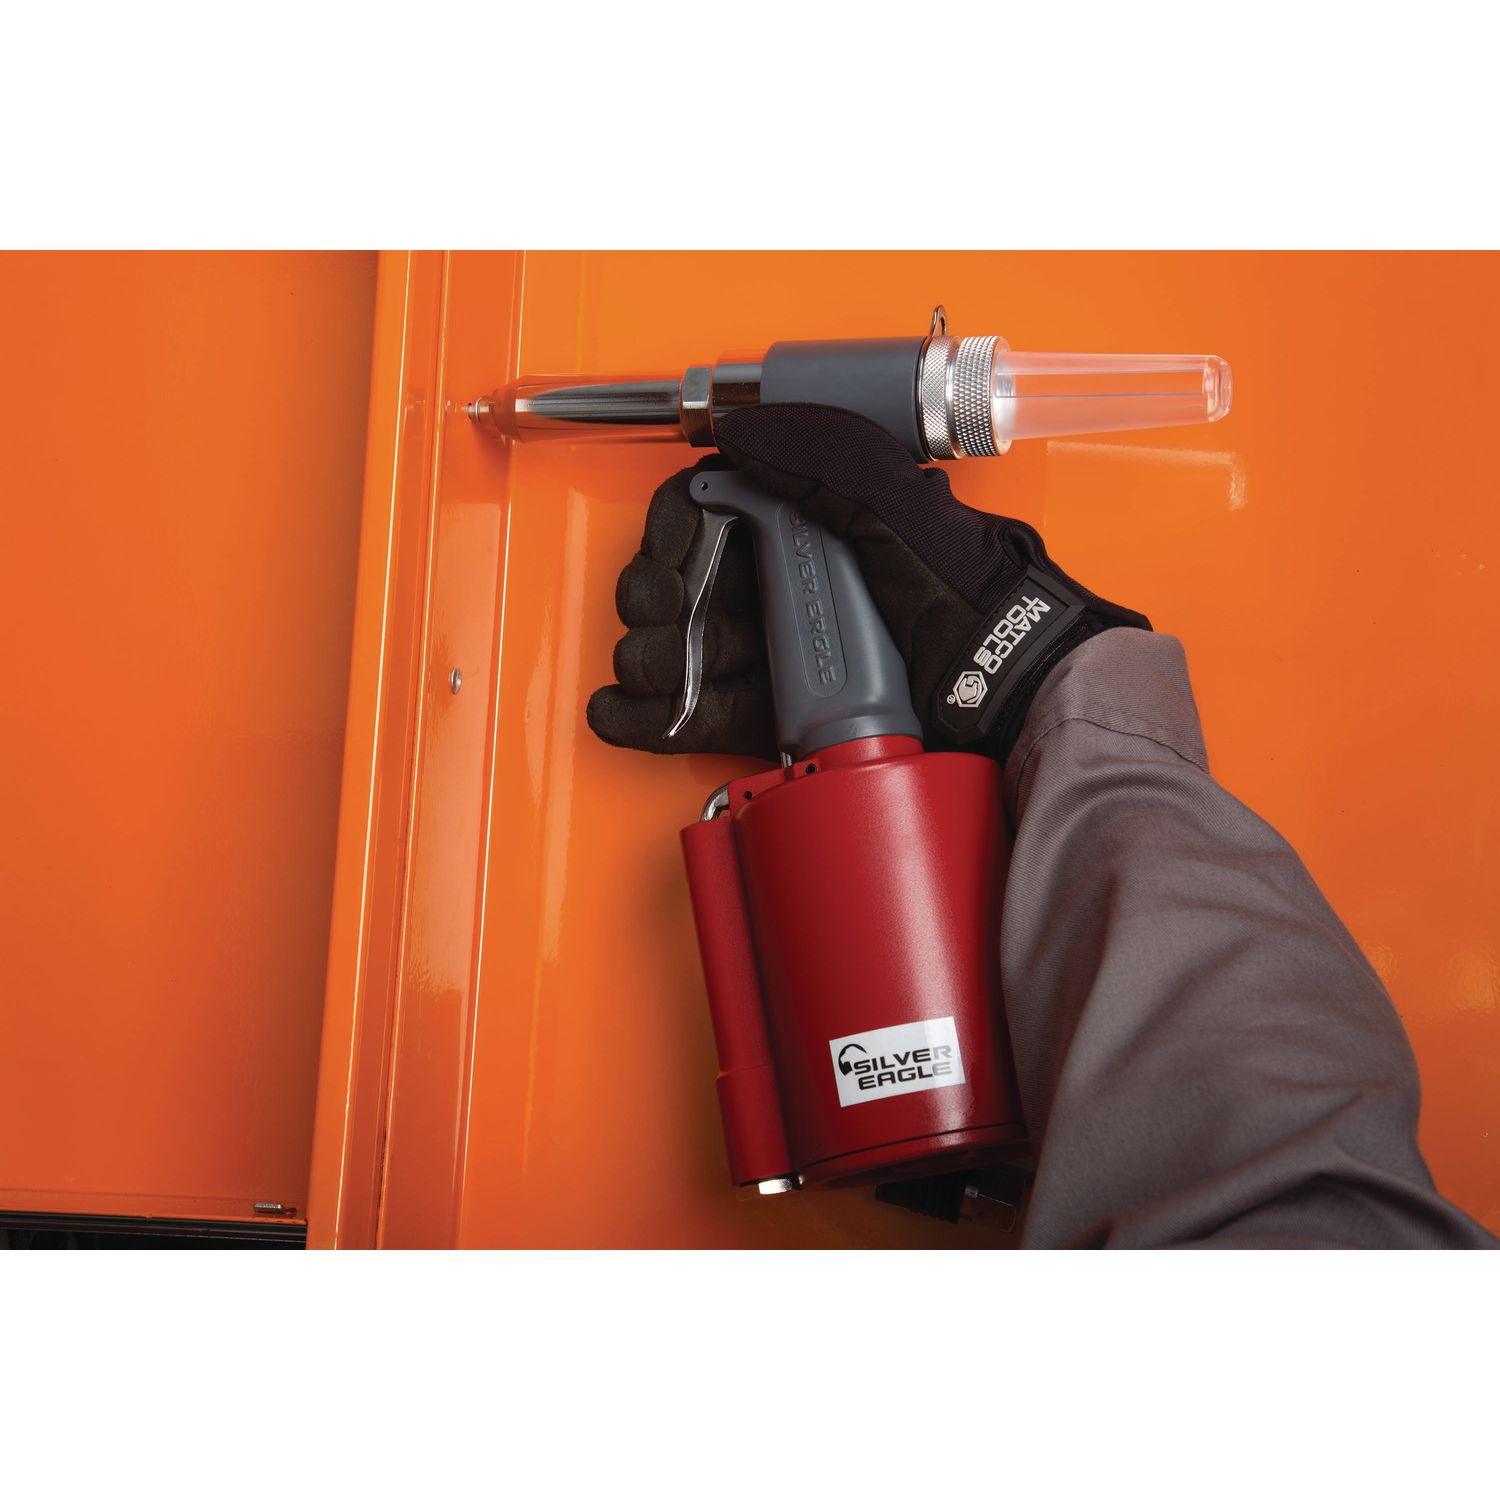 Mac Tools RG150K Hydraulic Rivet Gun Kit in Case for sale online